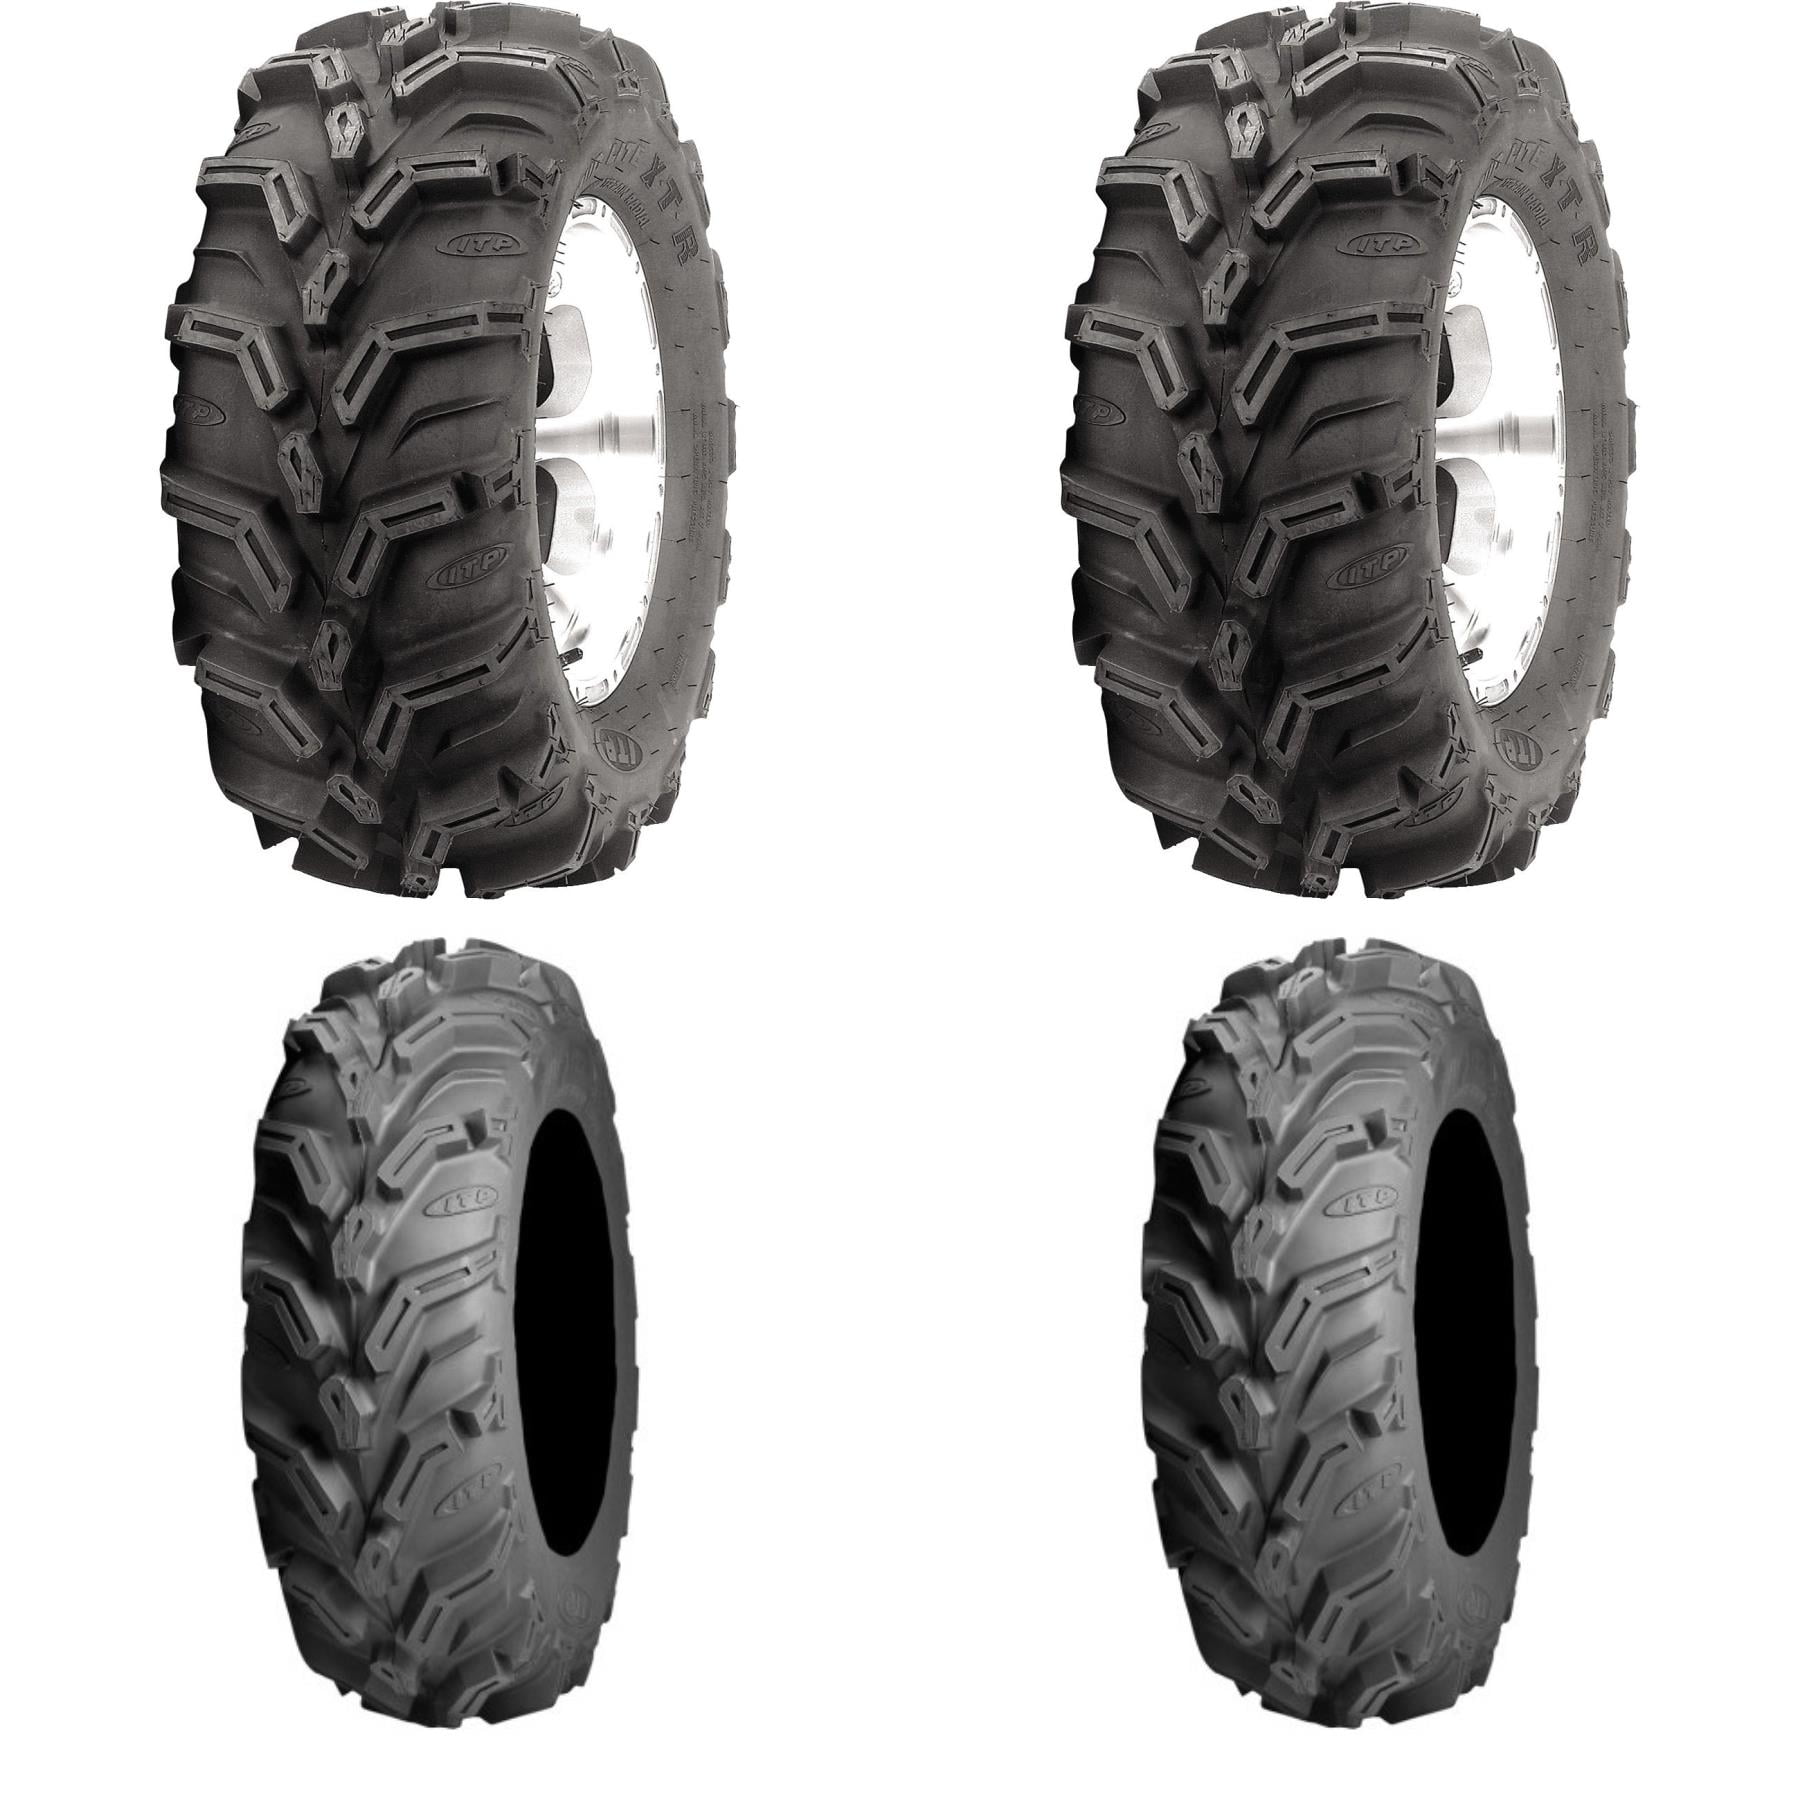 Best Vizzoni Tires For Mud. 6 Rugged Vizzoni Mud Tire Options